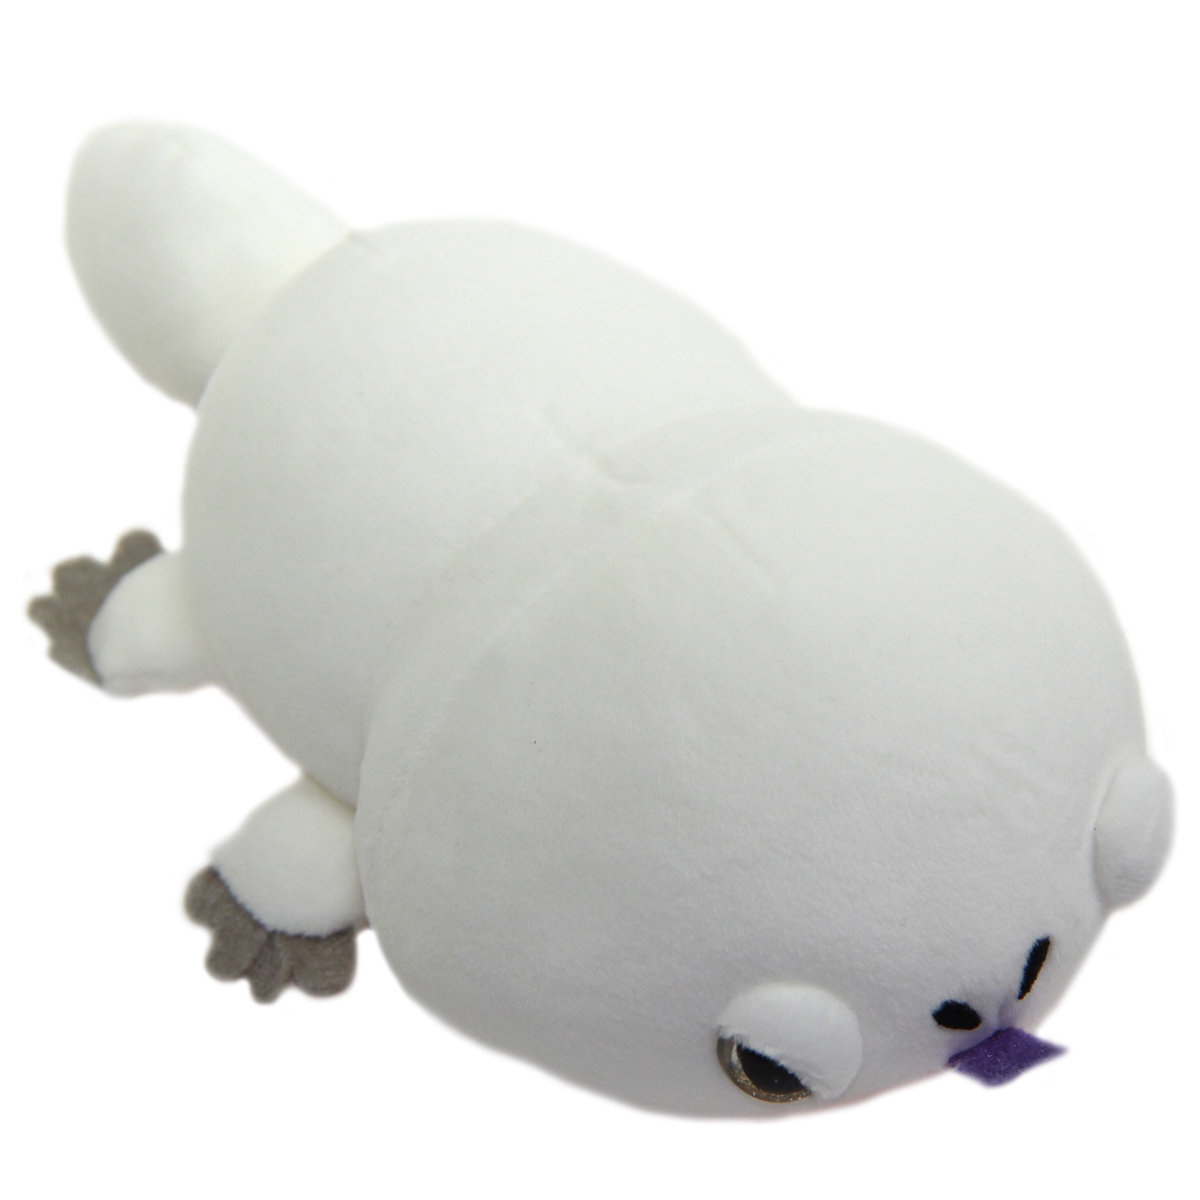 Albino Gecko Plush Collection Lizard Plush Toy Super Soft Stuffed Animal White 9 Inches